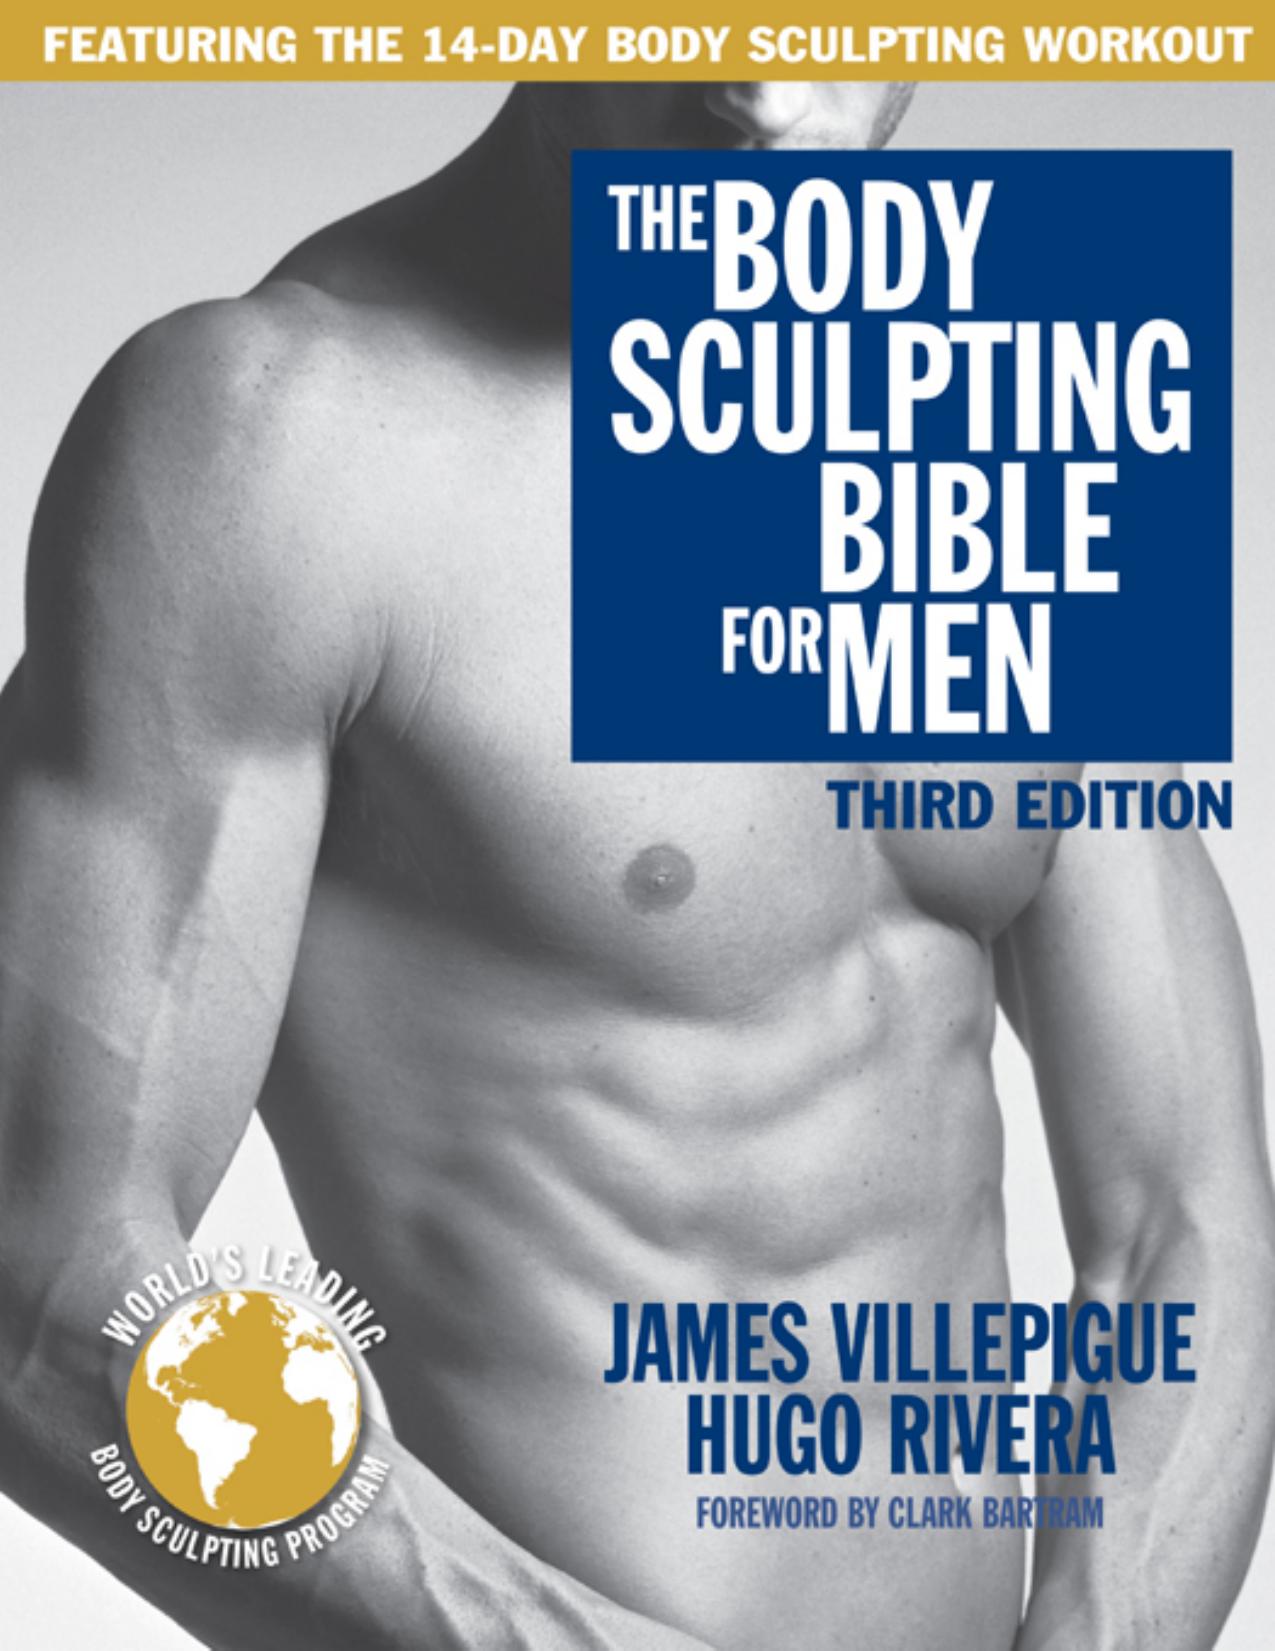 The Body Sculpting Bible for Men by James Villepigue